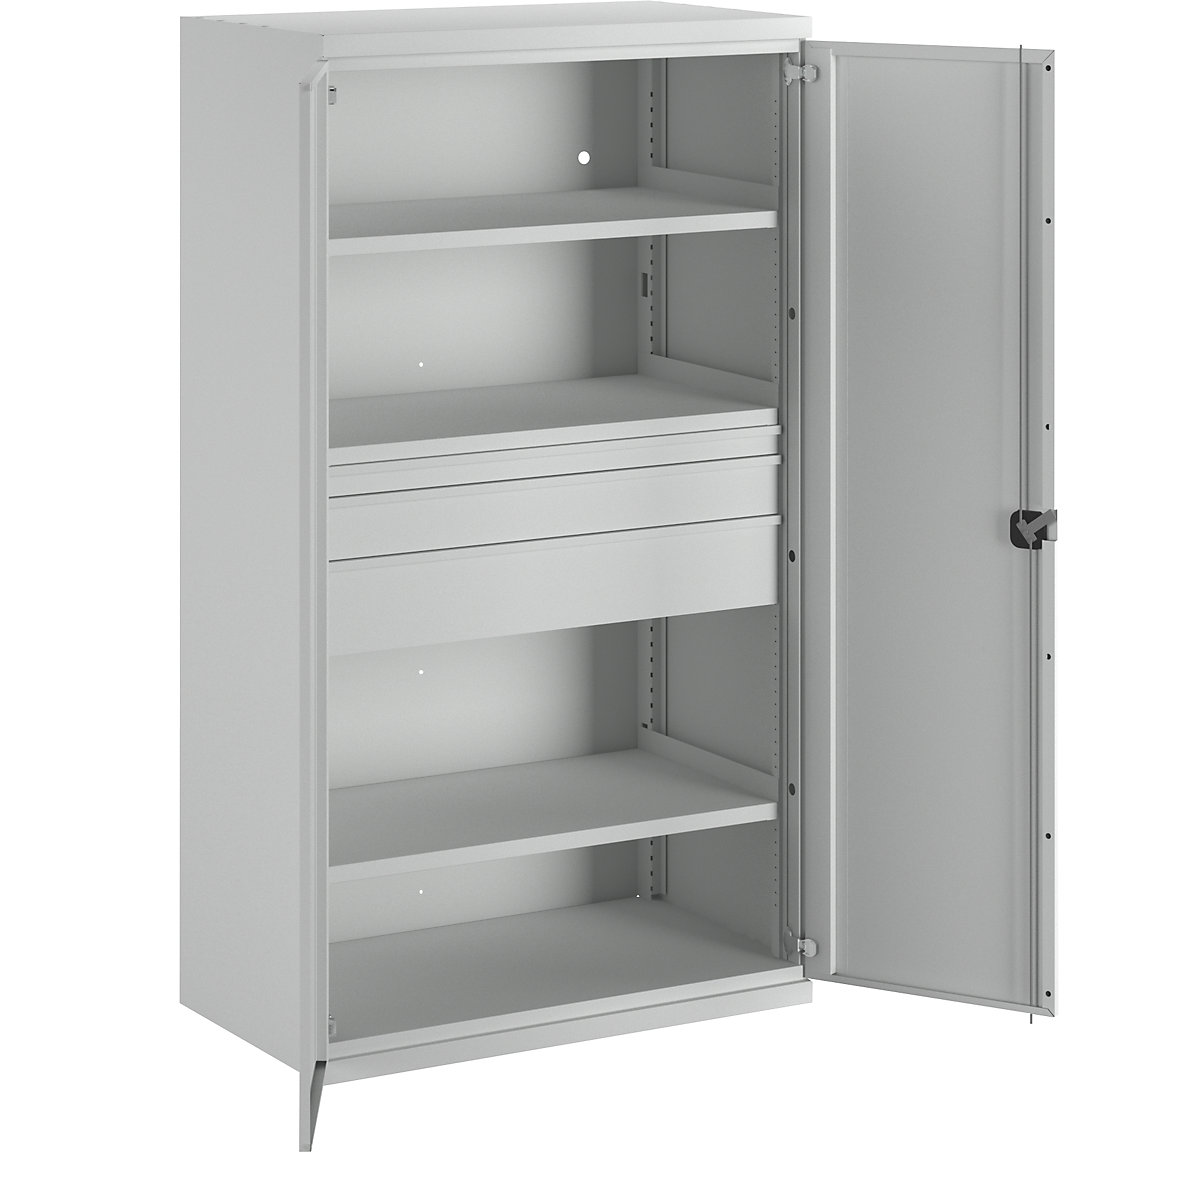 Heavy duty cupboard made of steel – eurokraft pro, 3 shelves, drawers 1 x 60 mm, 1 x 120 mm, 1 x 180 mm high, light grey / light grey-3